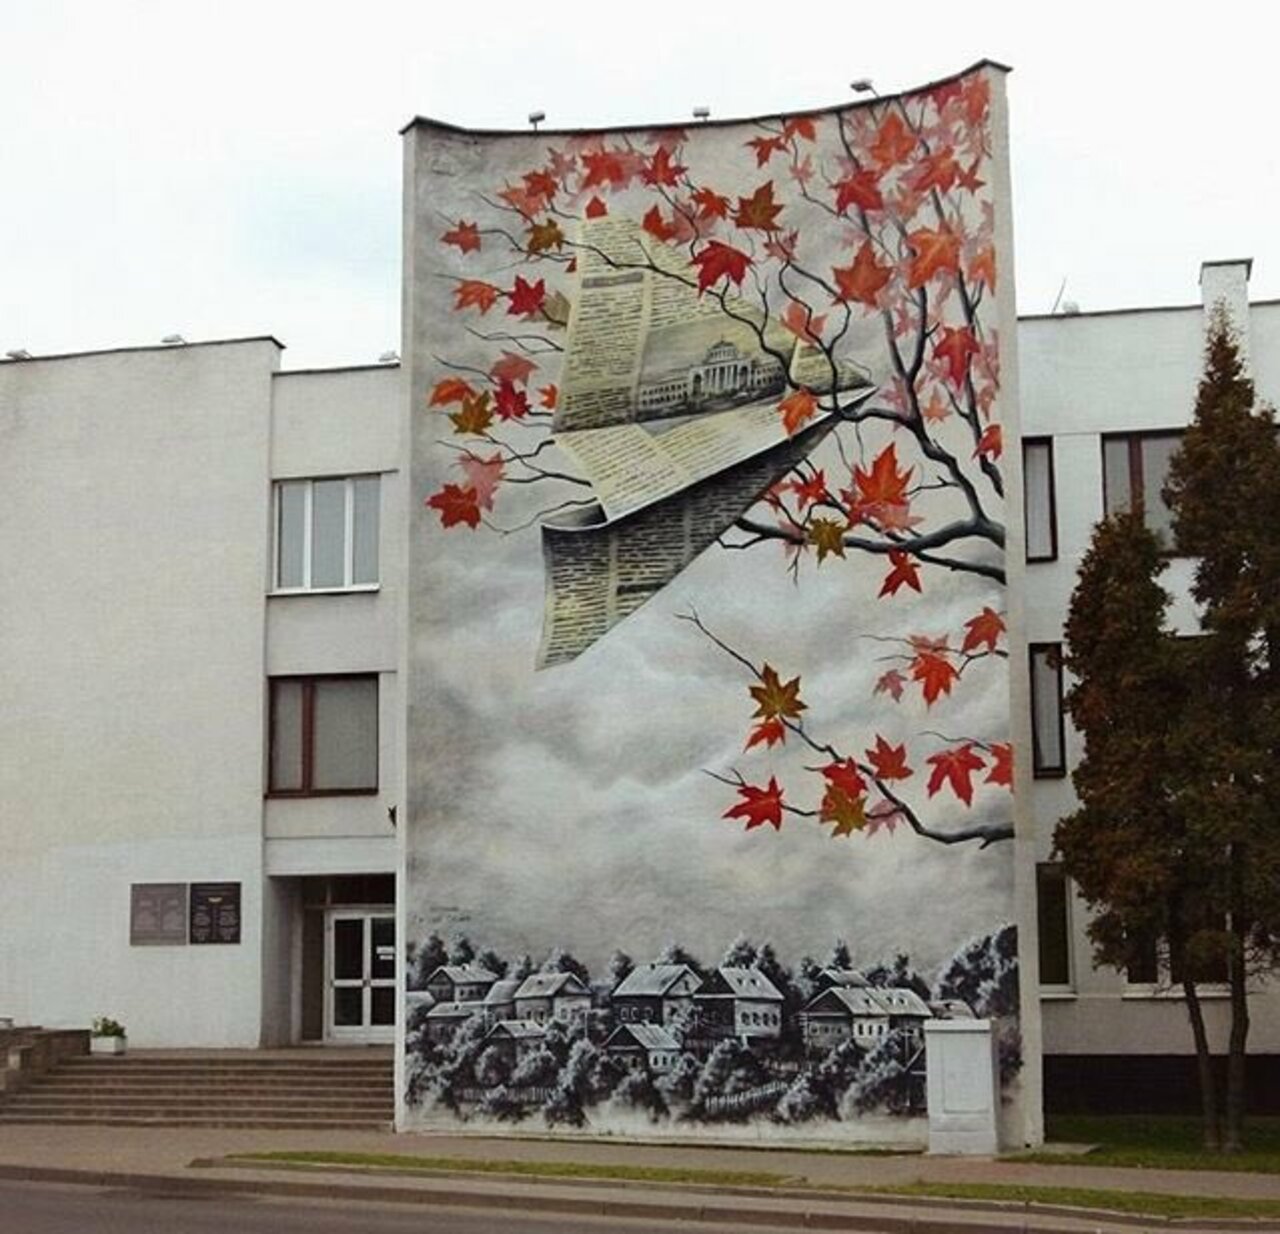 New Street Art by MUTUS in Belarus 

#art #graffiti #mural #streetart https://t.co/7TES3JjopG